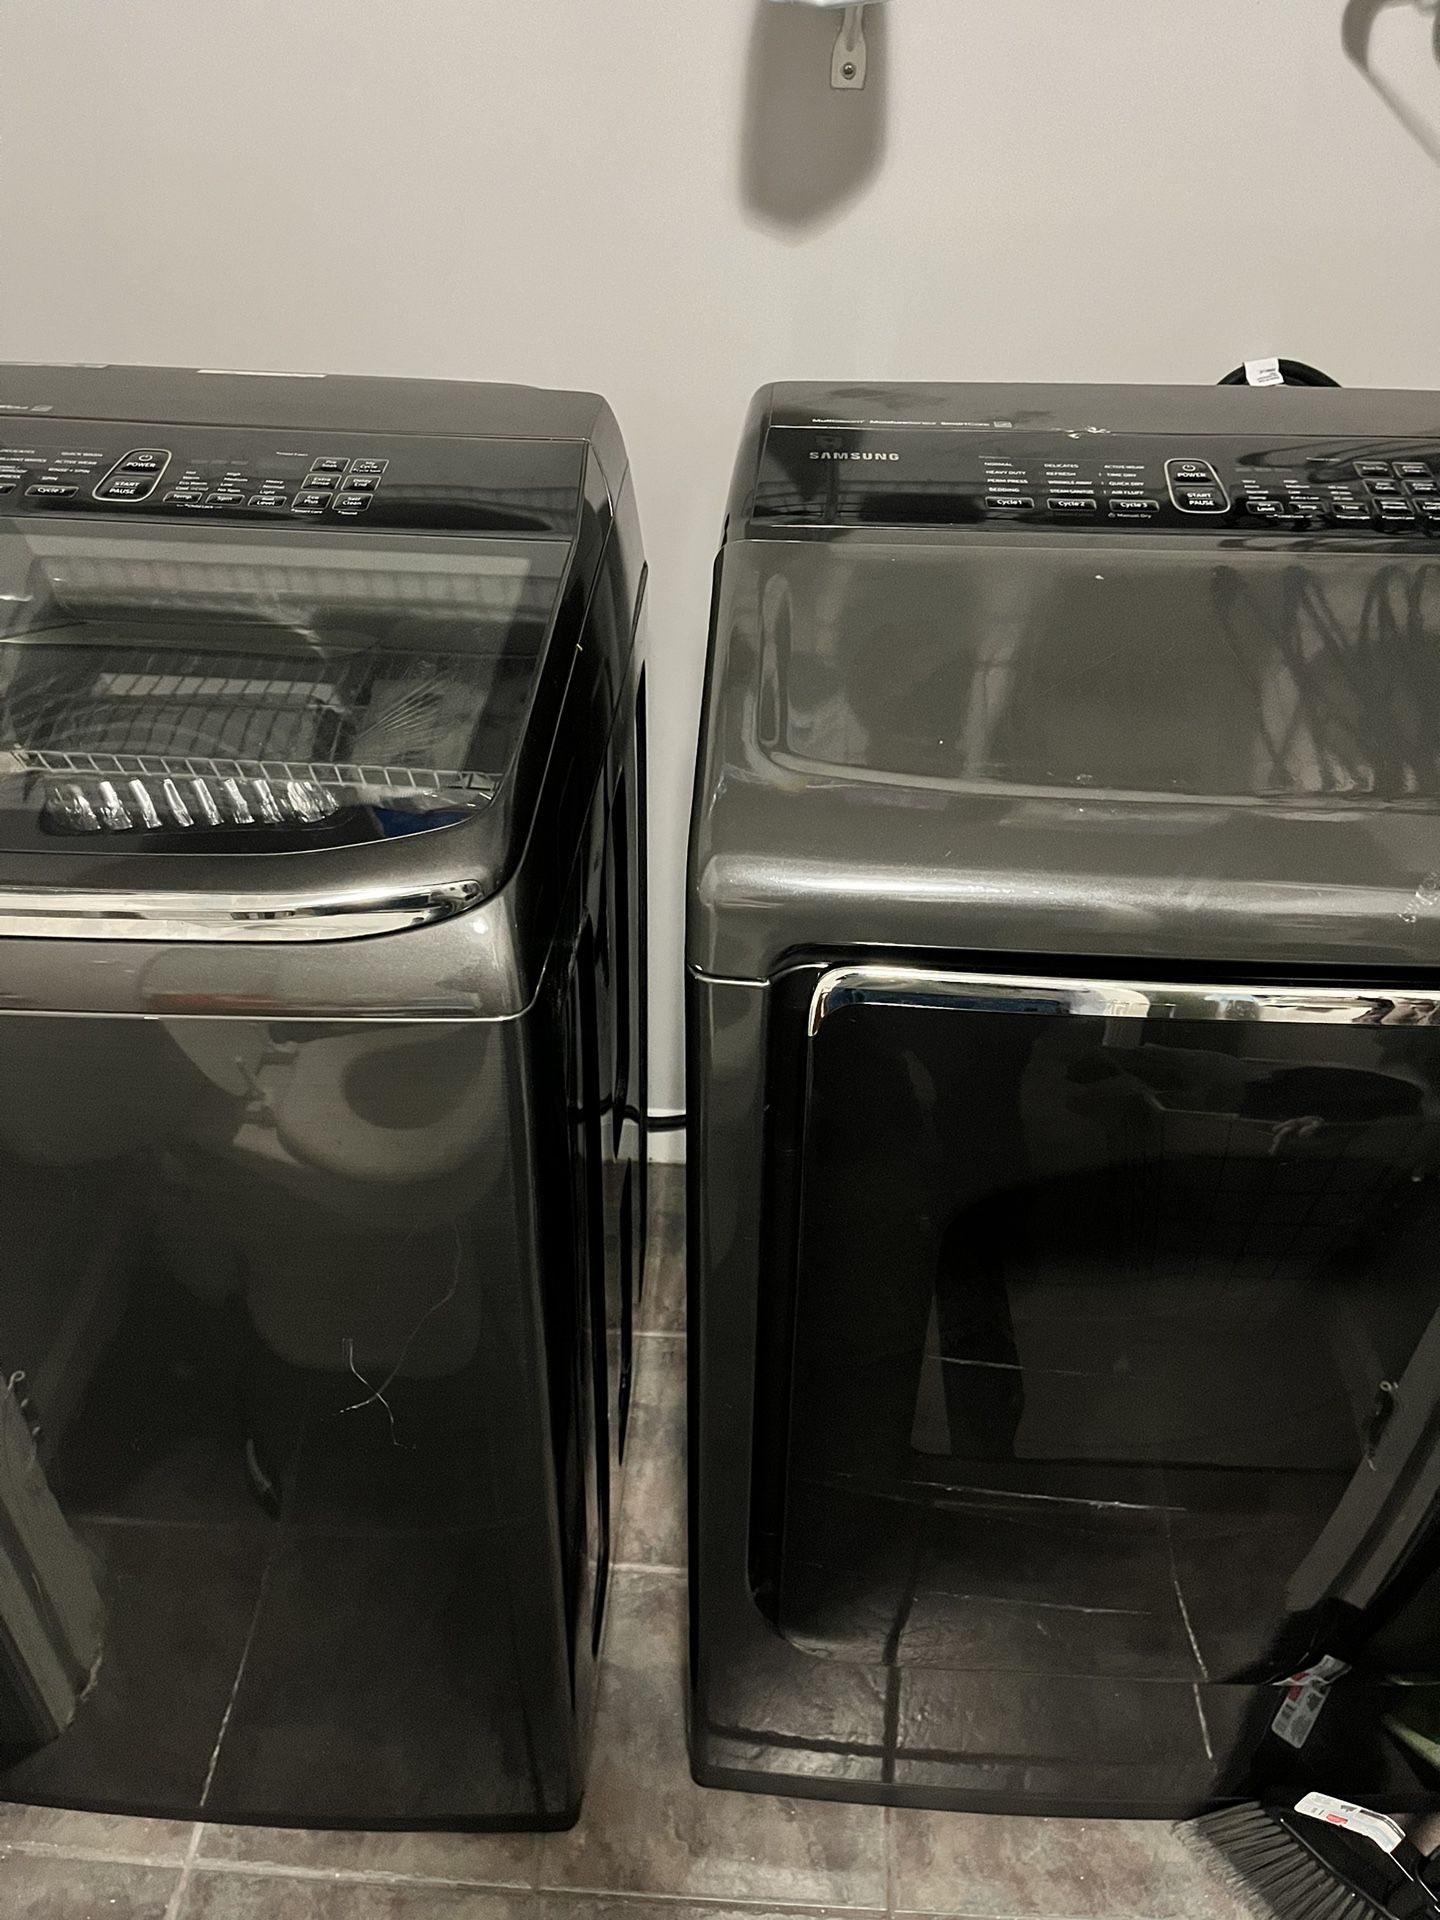 Washer Dryer Set Combo